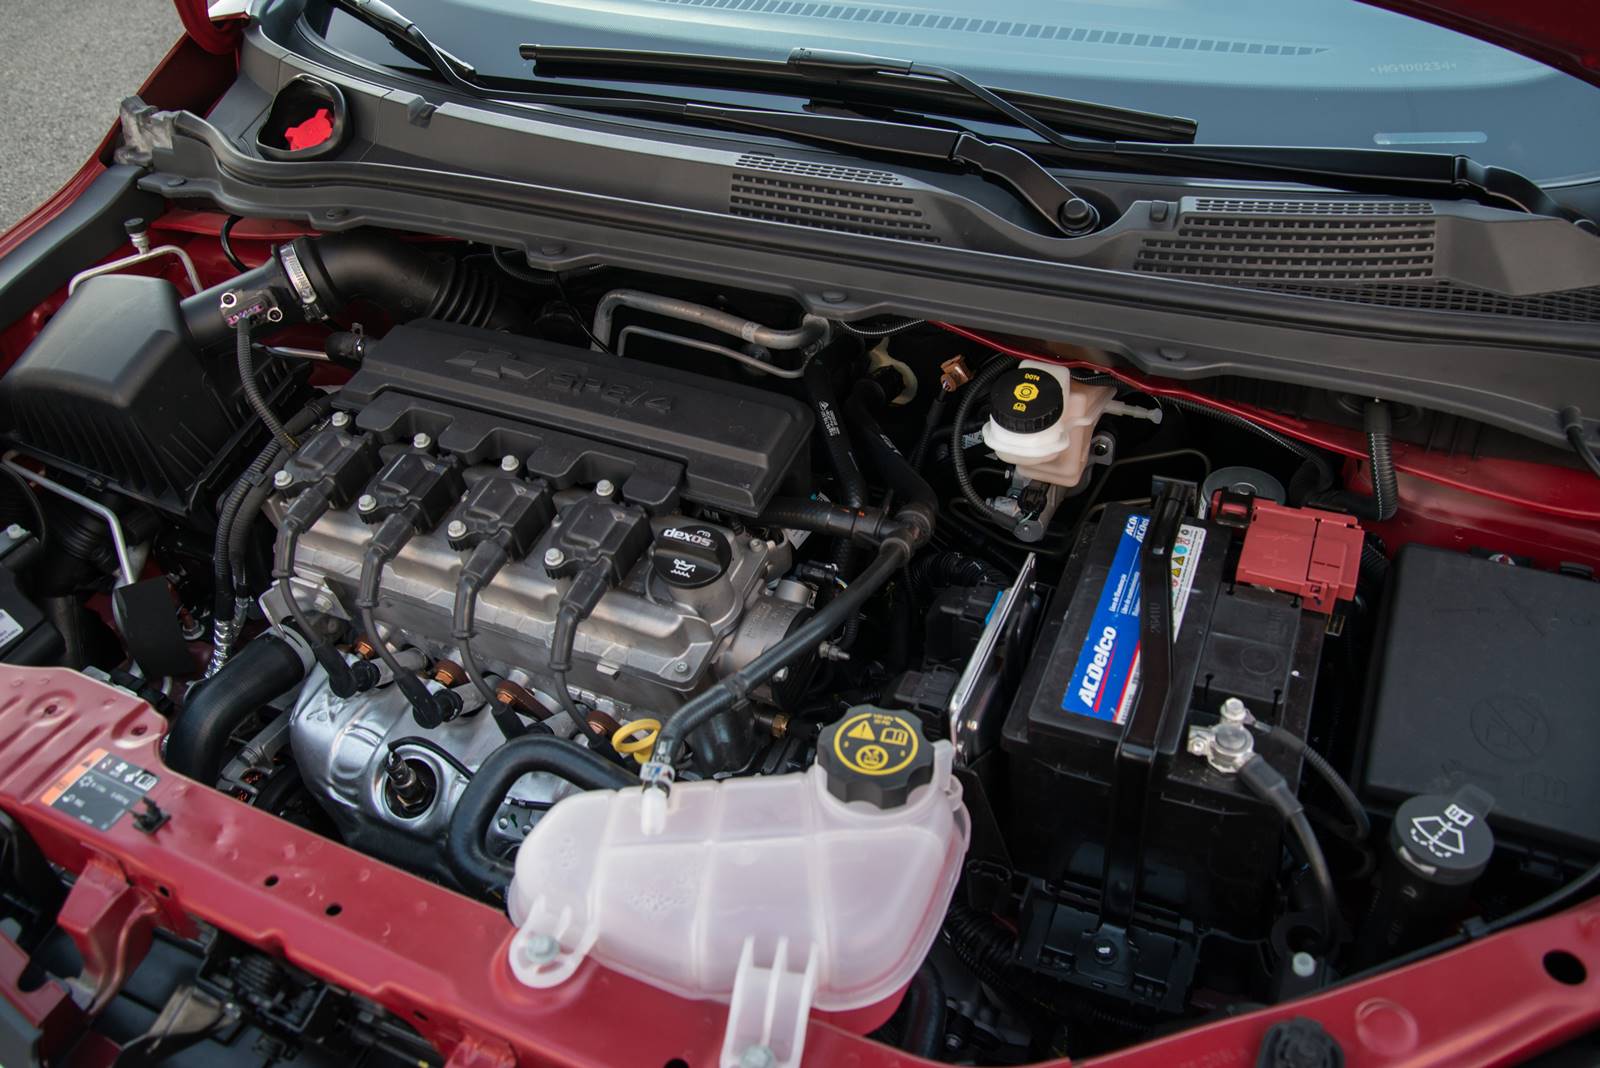 Chevrolet Onix Plus Premier 2020 (Azul Seeker) em detalhes